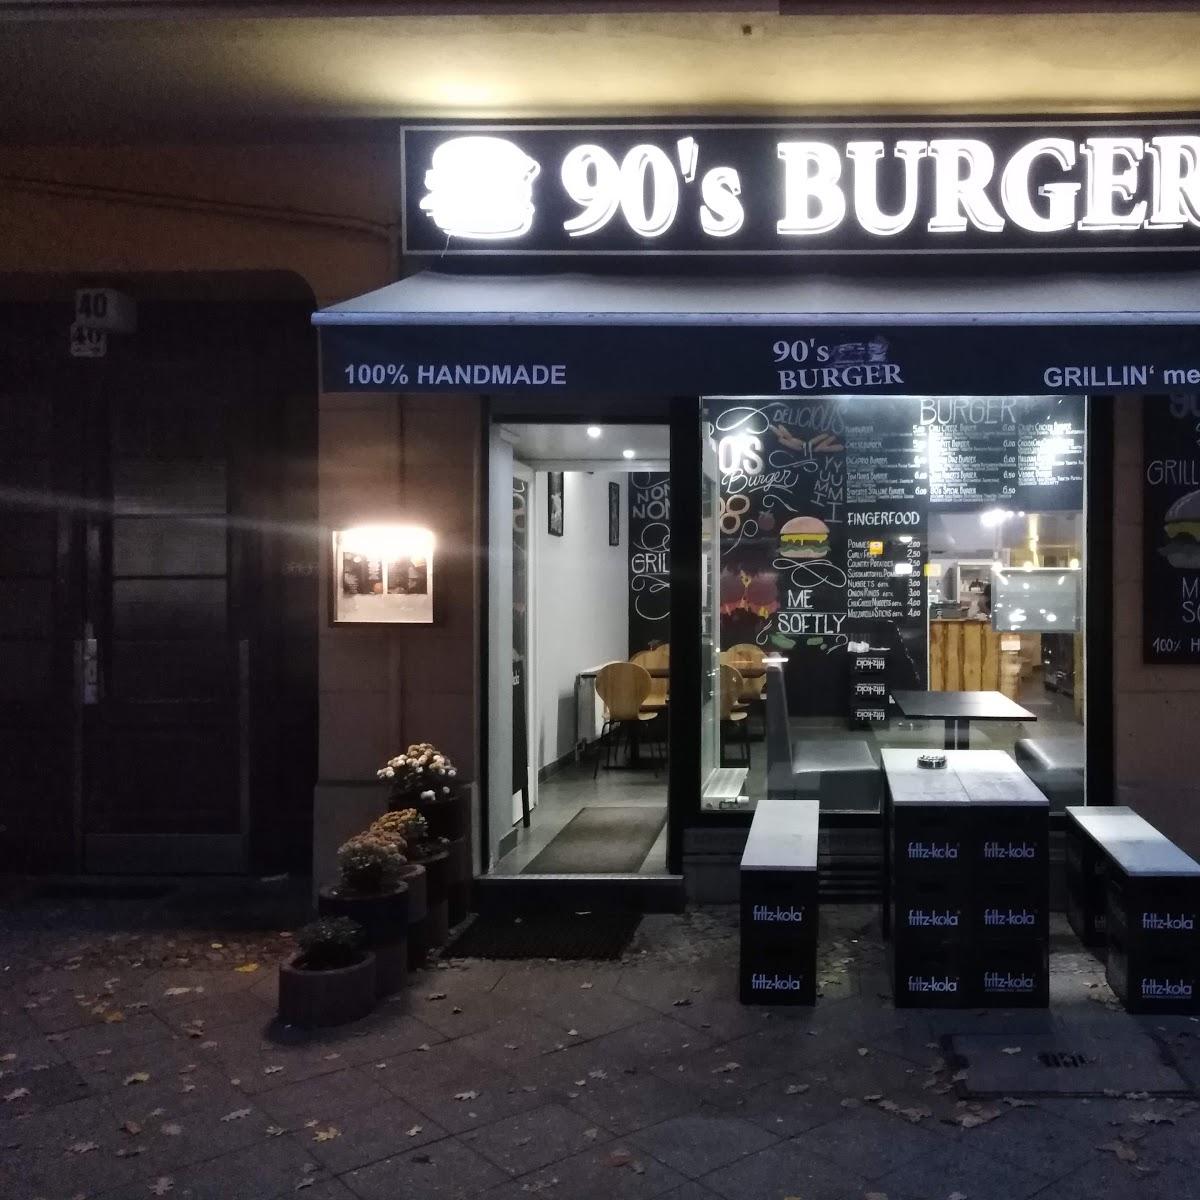 Restaurant "90